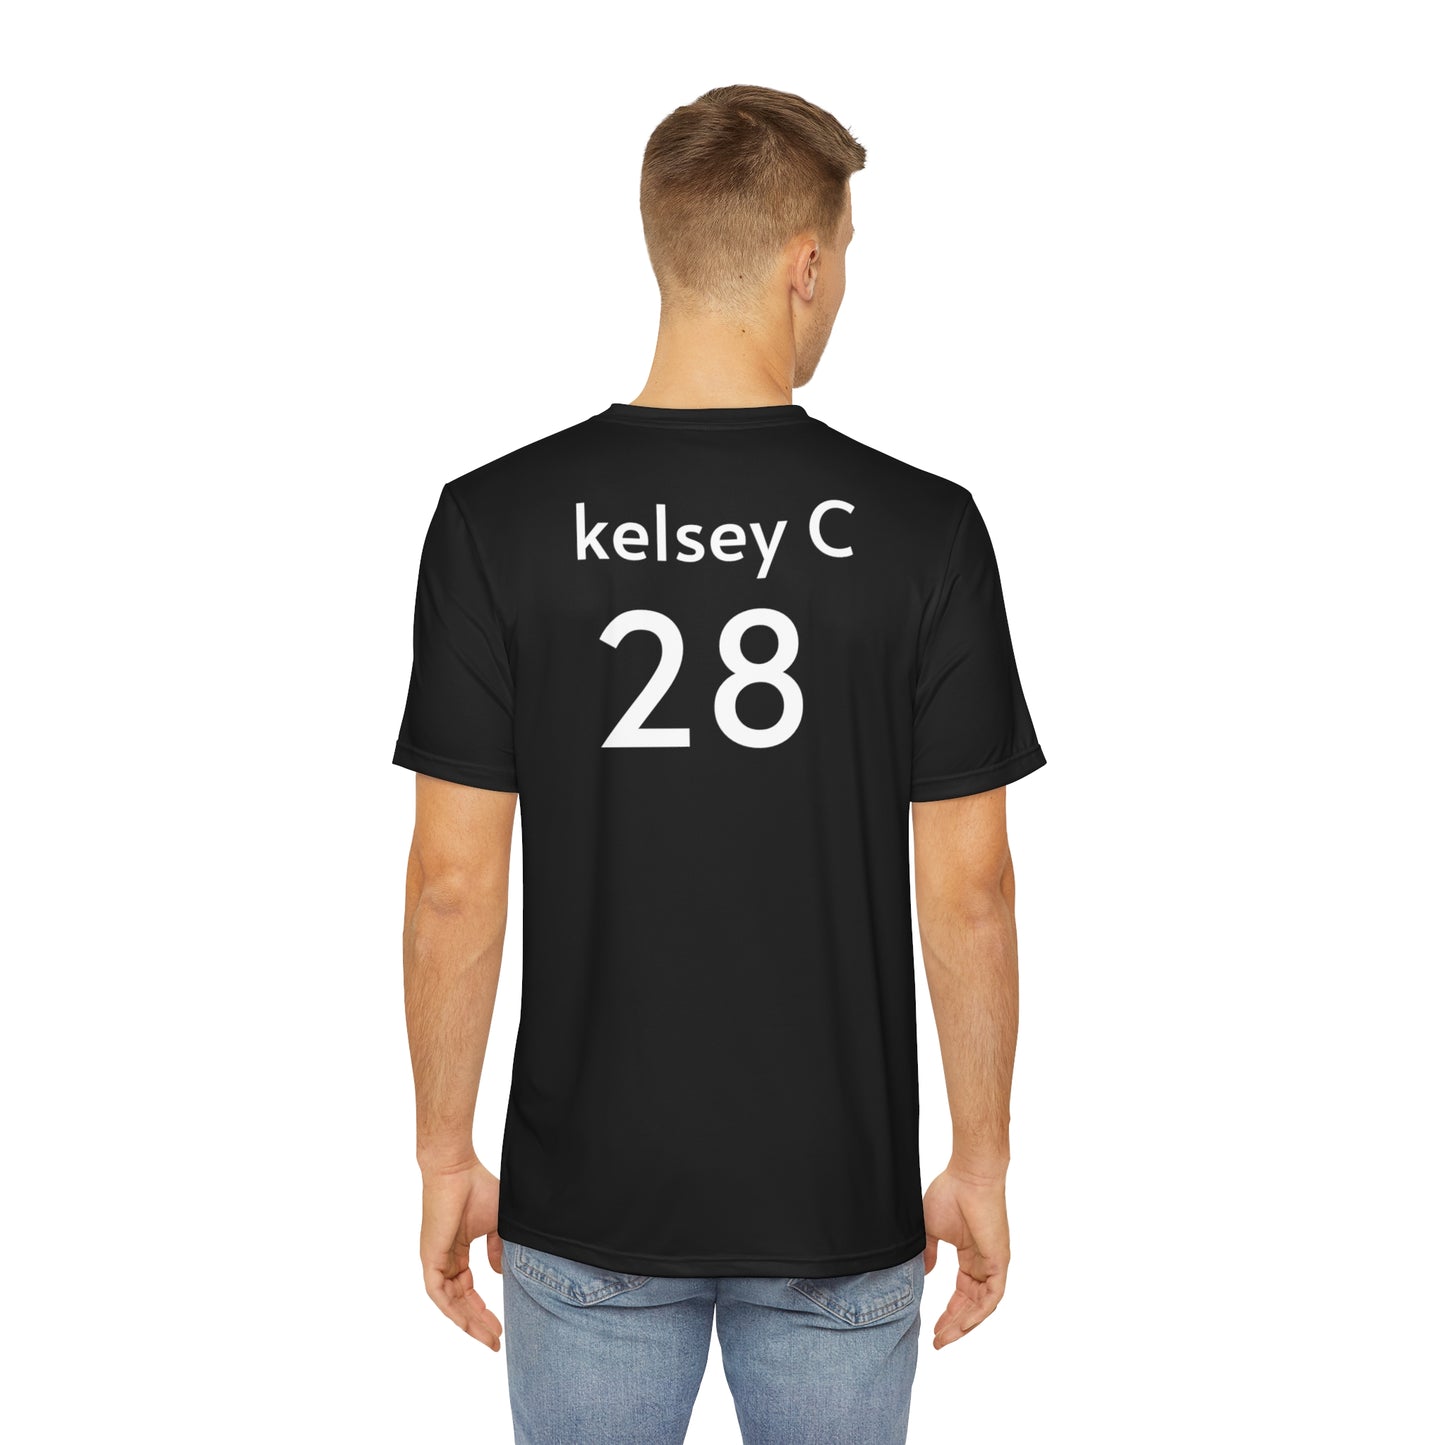 Kelsey C Team Shirt